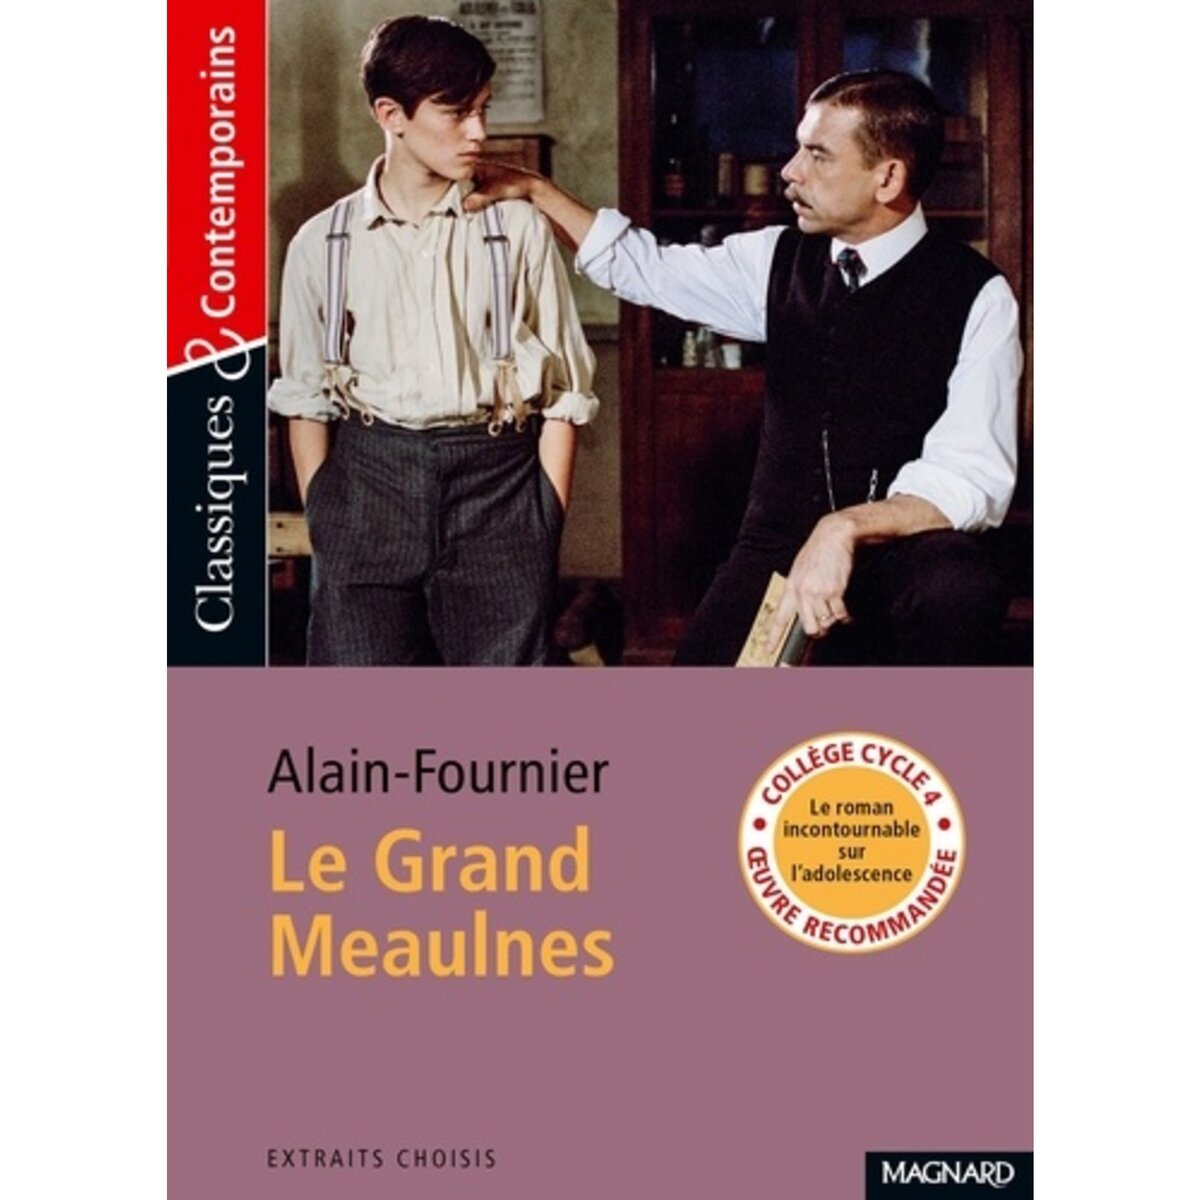  LE GRAND MEAULNES, Alain-Fournier